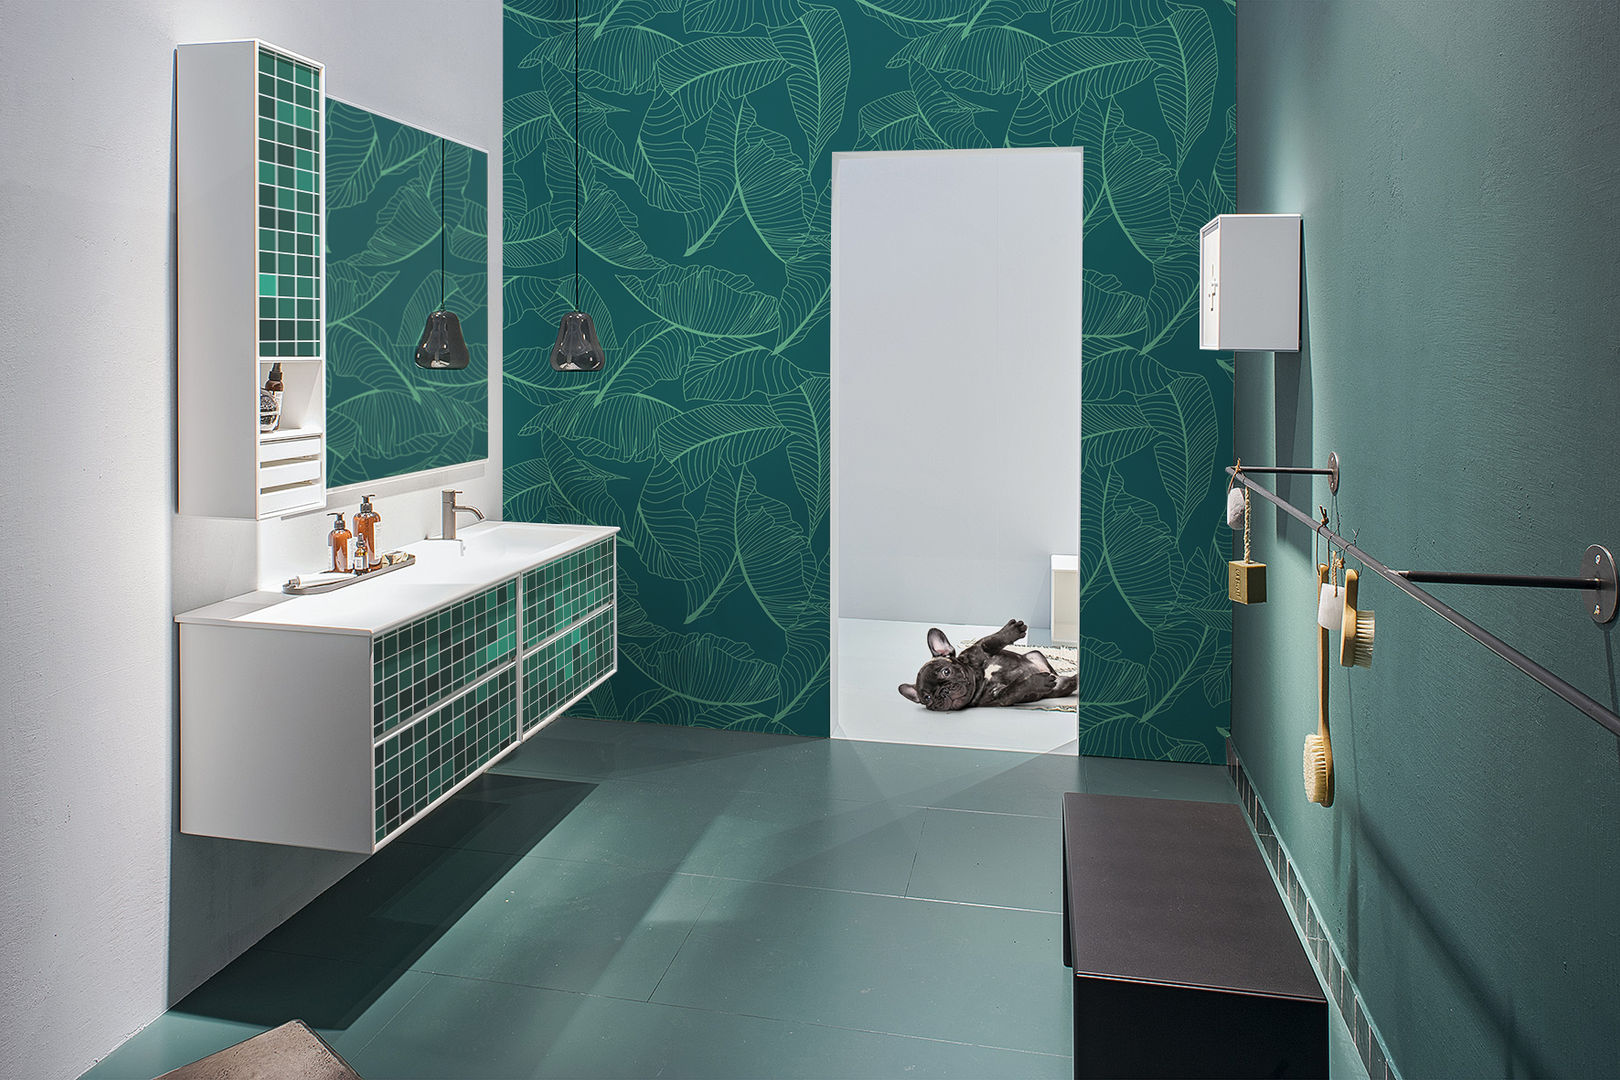 LOOKING THROUGH THE GREEN EYE Pixers Ванная комната в стиле модерн Декор